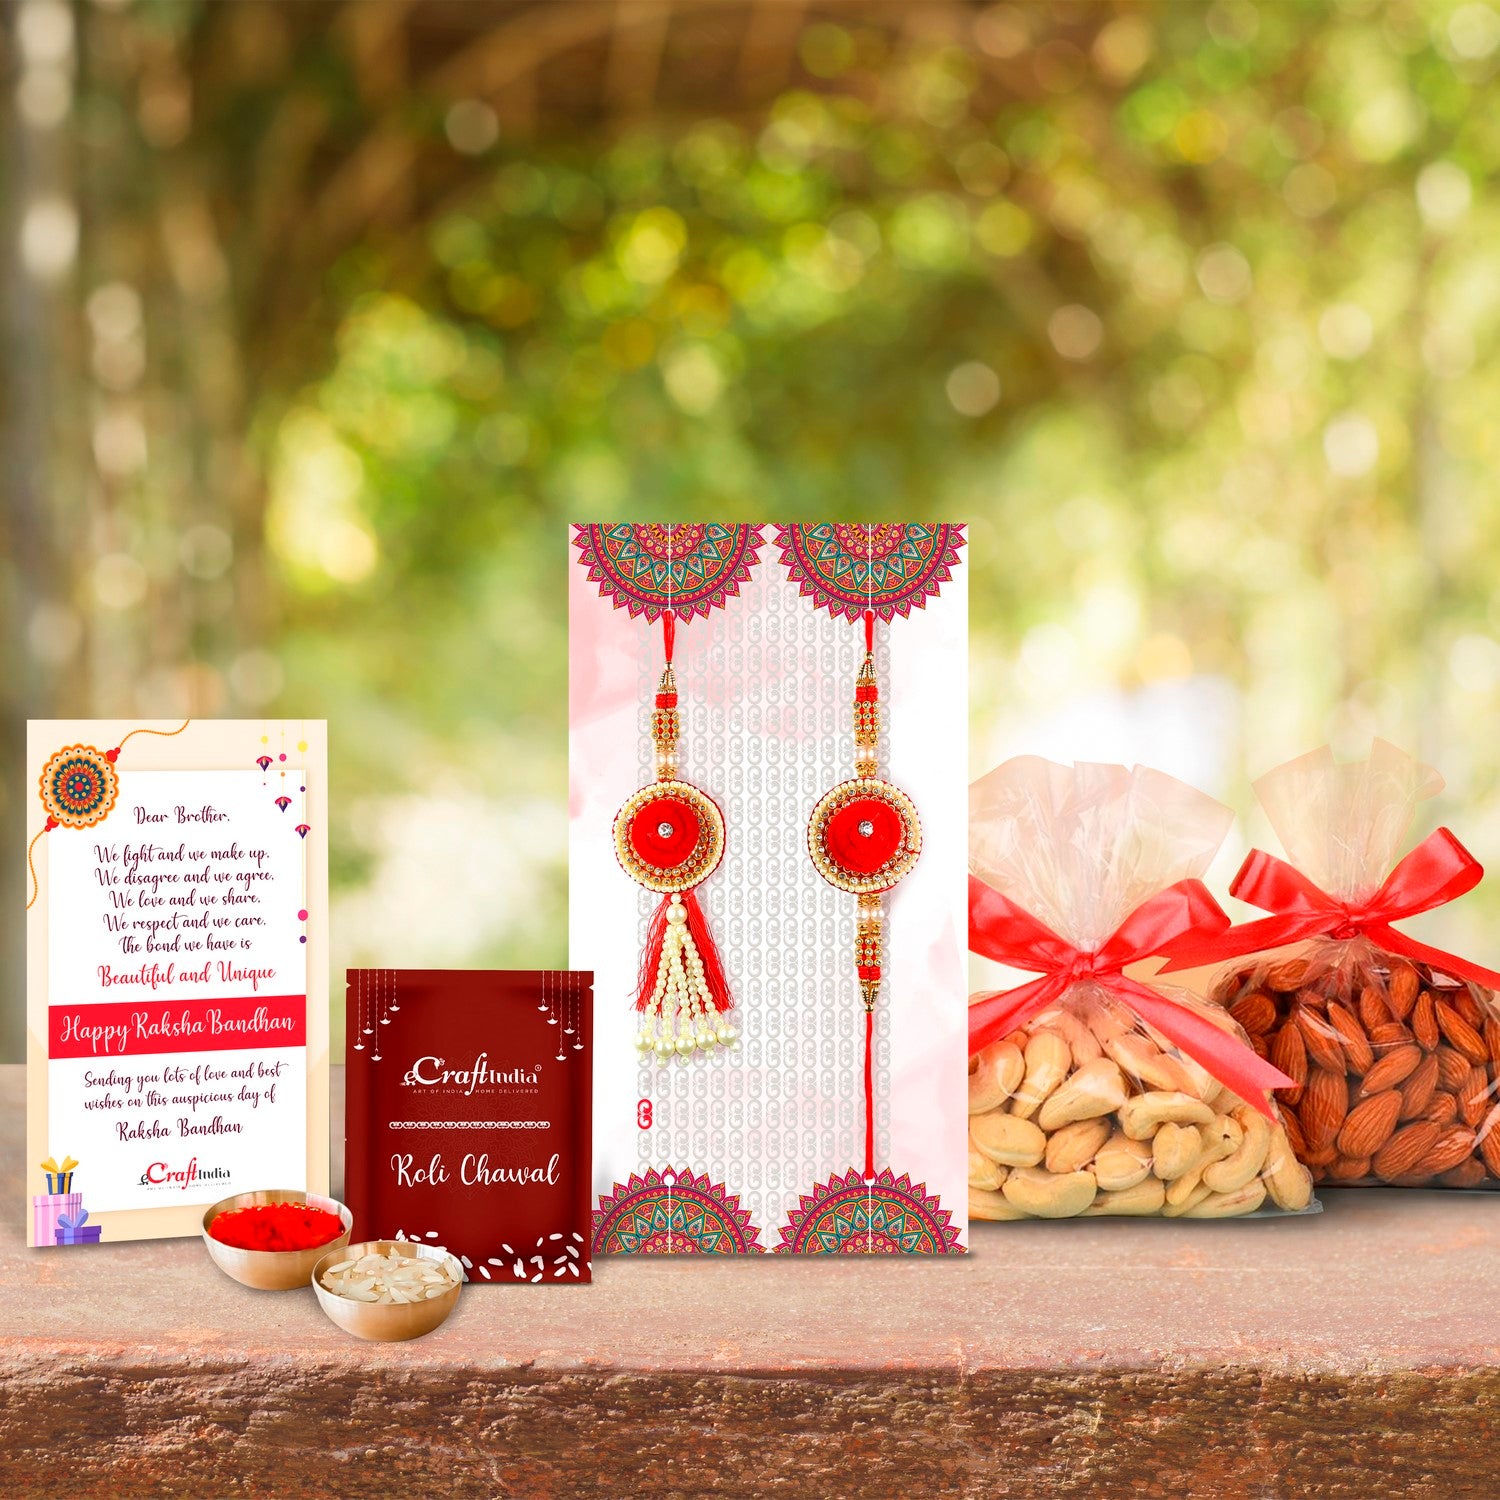 Bhaiya Bhabhi Rakhi Set with Badam and Cashew (200 gm each, total 400 gm) and Roli Chawal Pack, Best Wishes Greeting Card